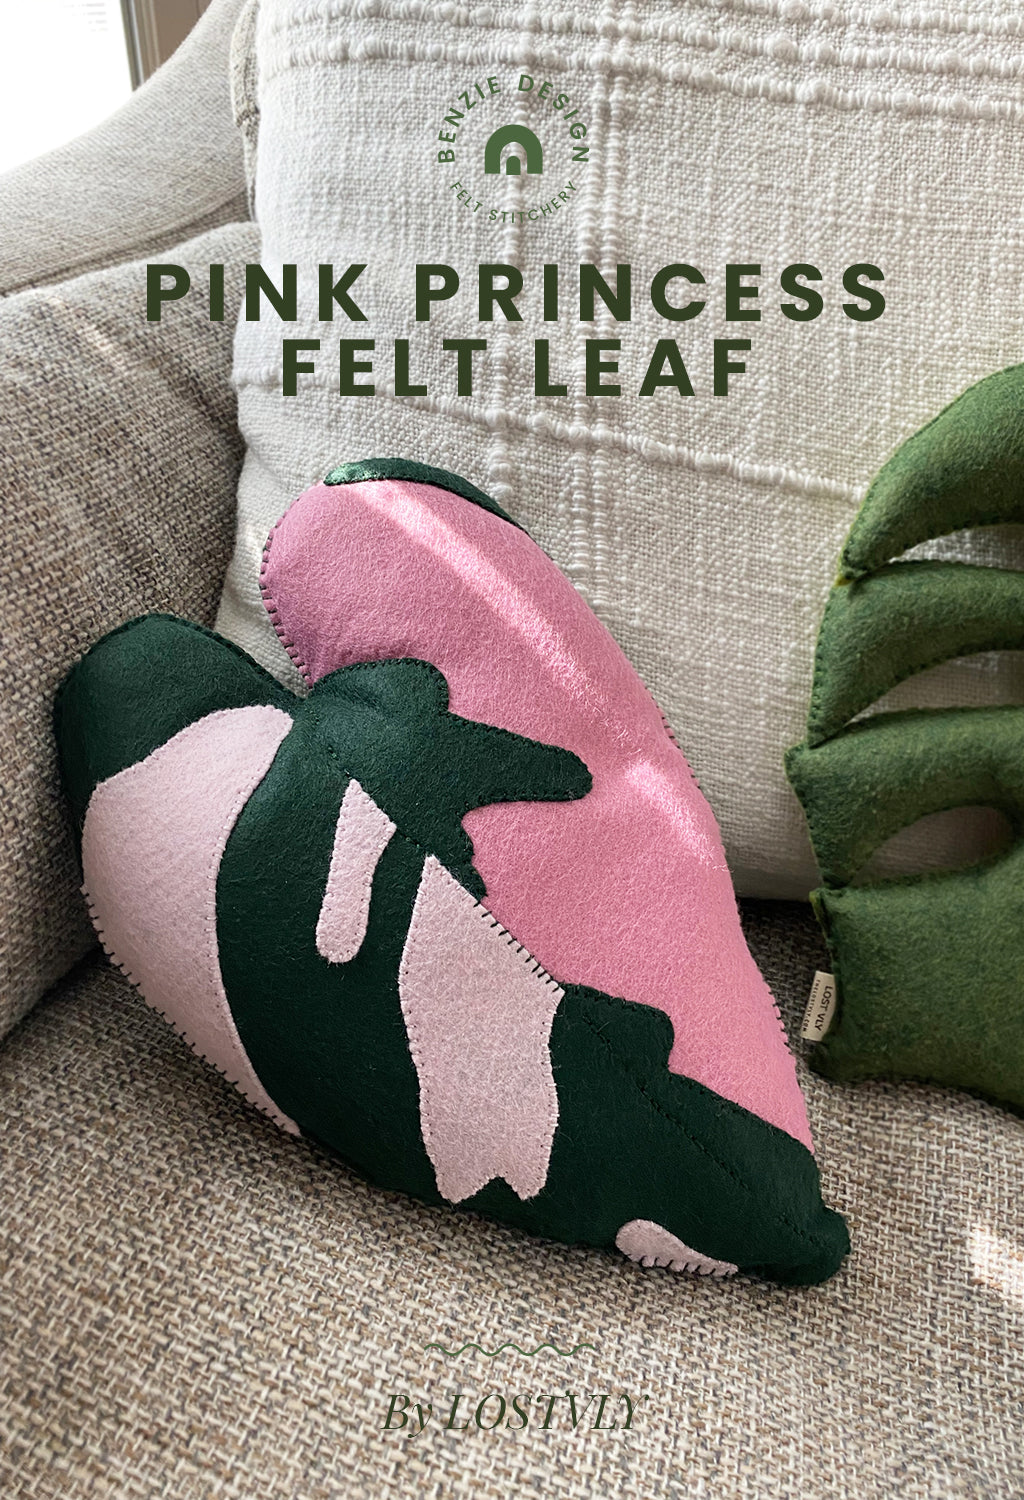 Pink princess felt leaf tutorial